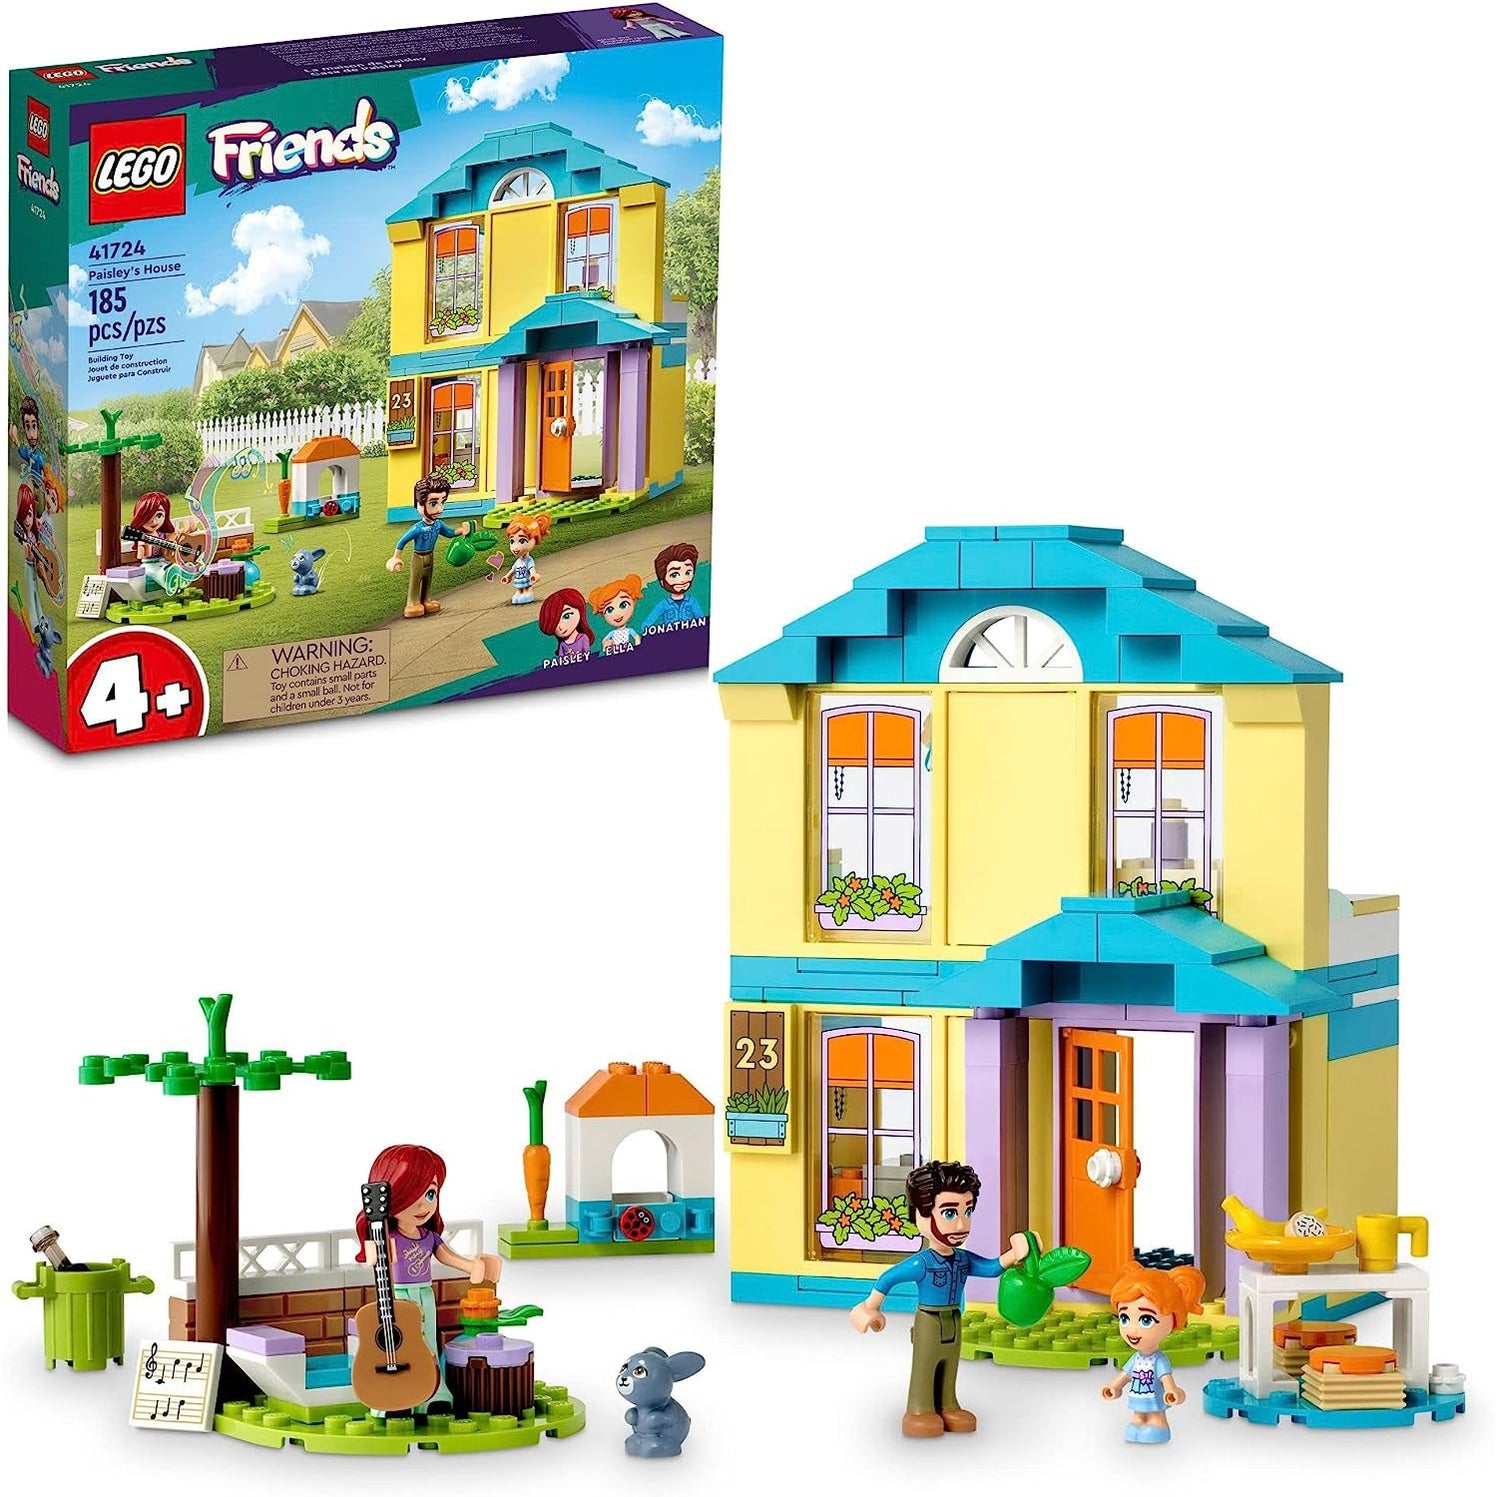 Lego 41724 Friends Paisley’s House